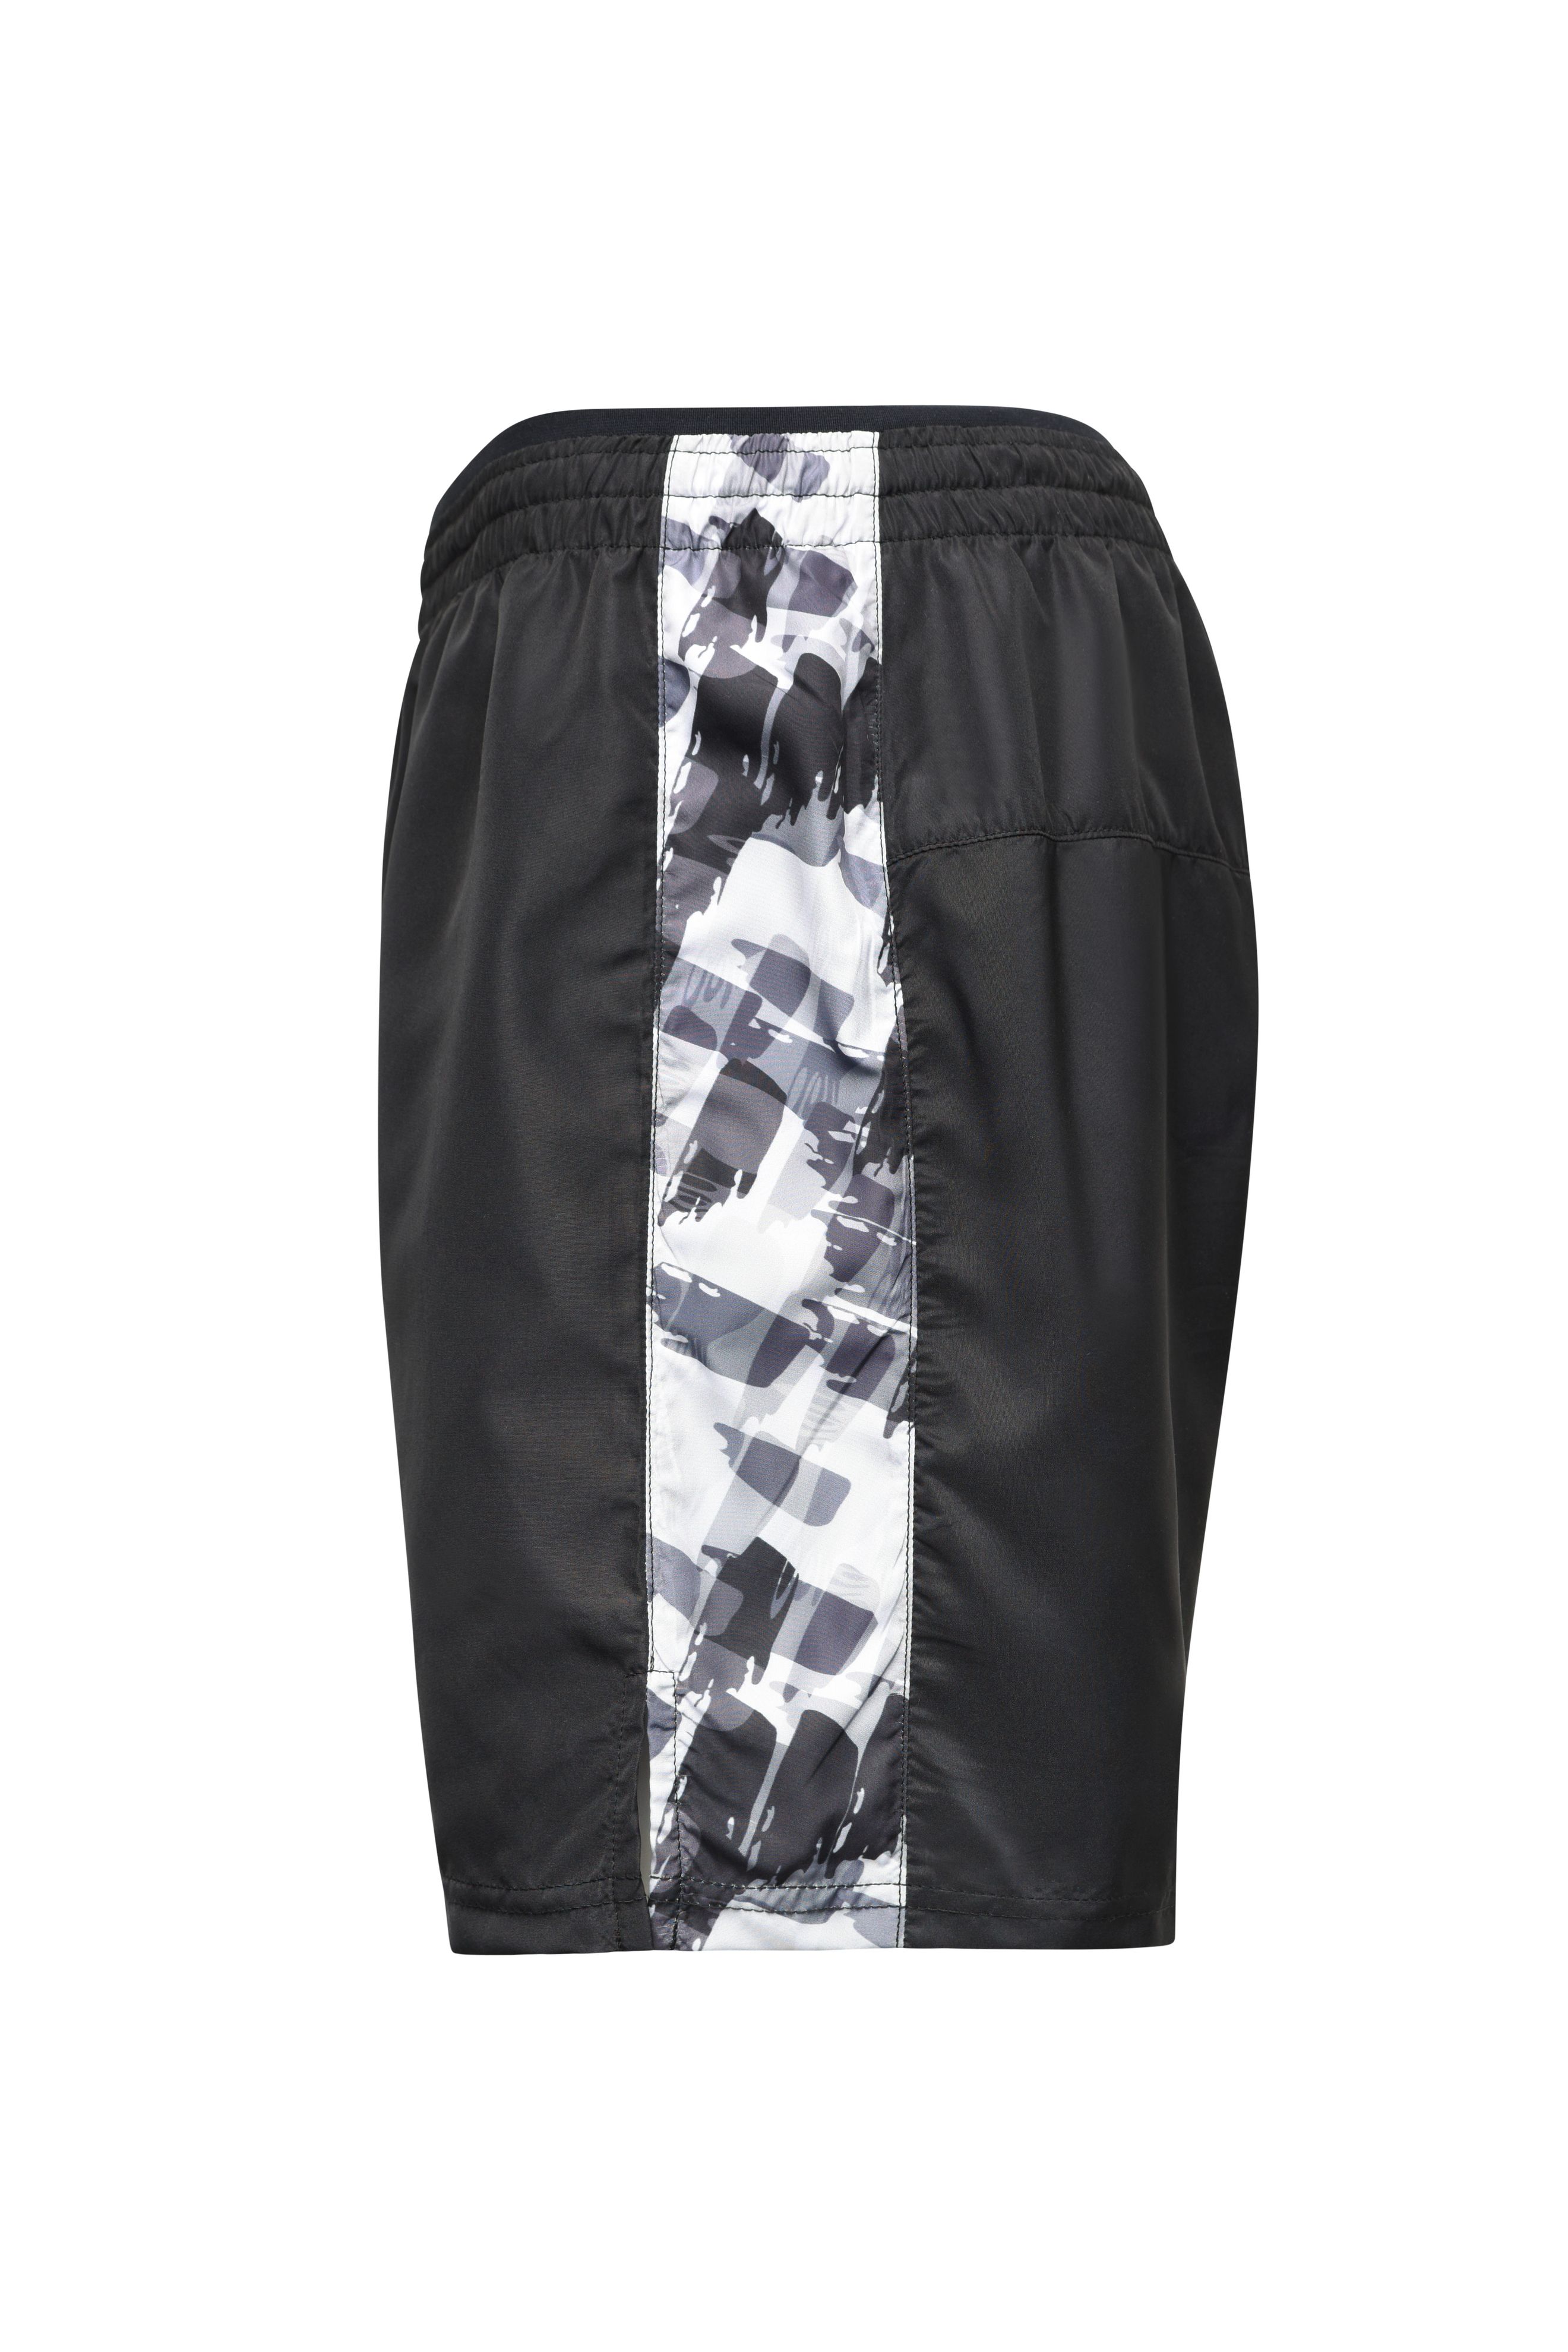 Men's Sports Shorts JN526 Leichte Shorts aus recyceltem Polyester